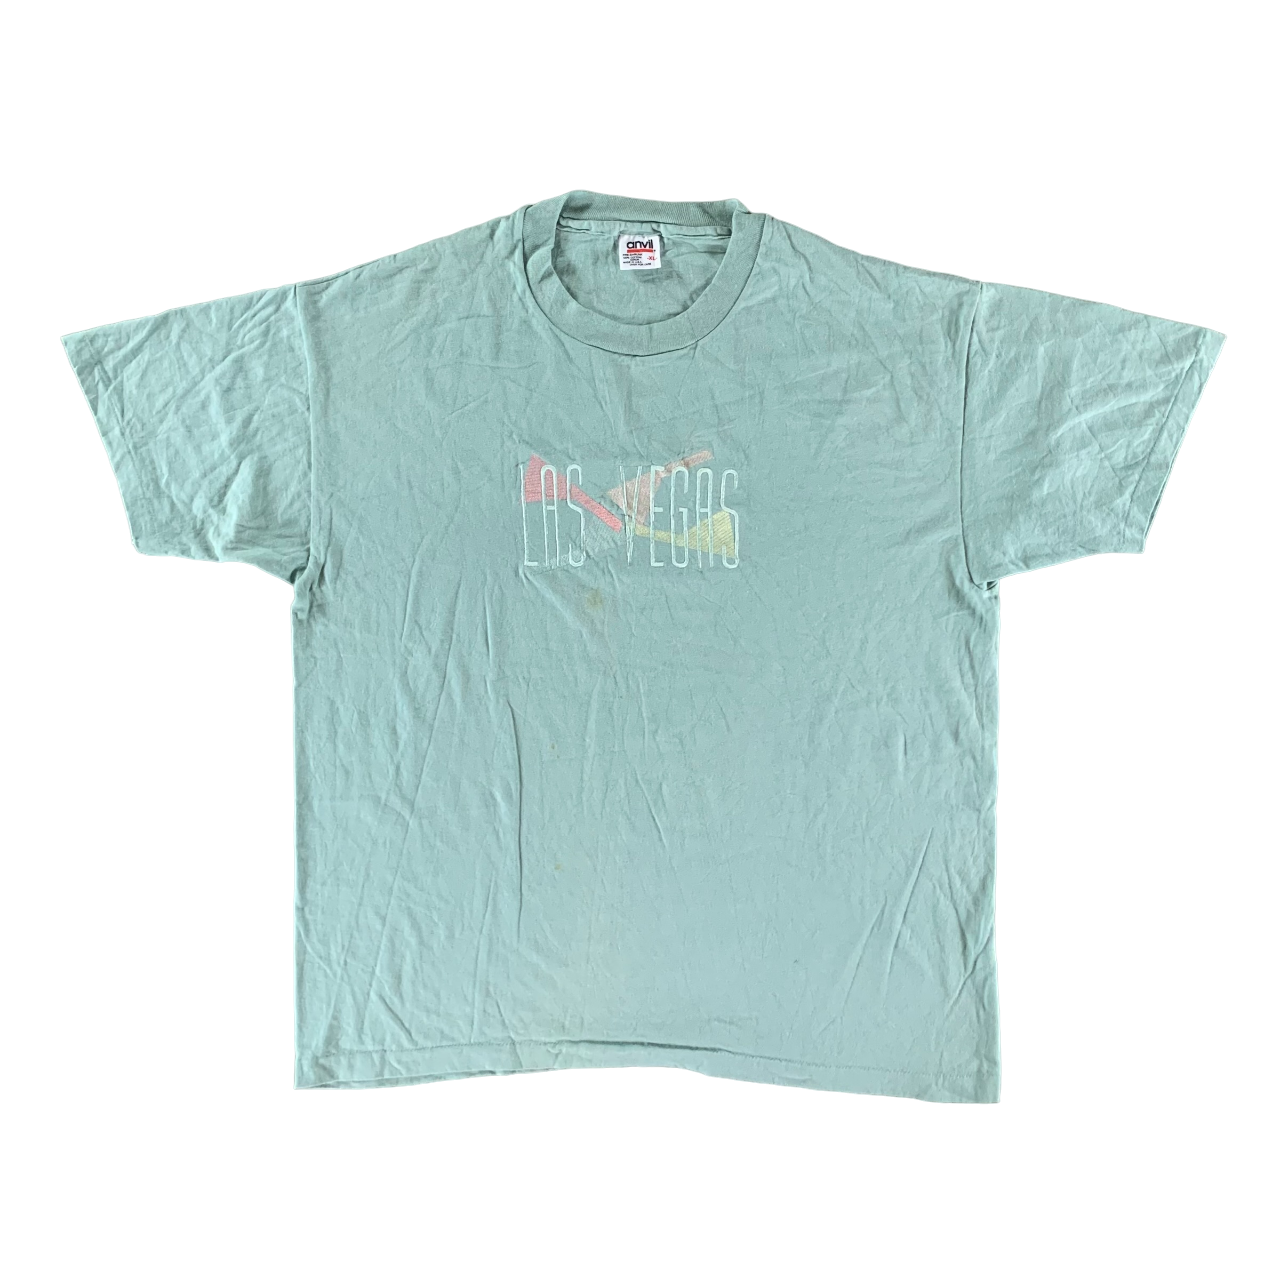 Vintage 1990s Las Vegas T-shirt size XL